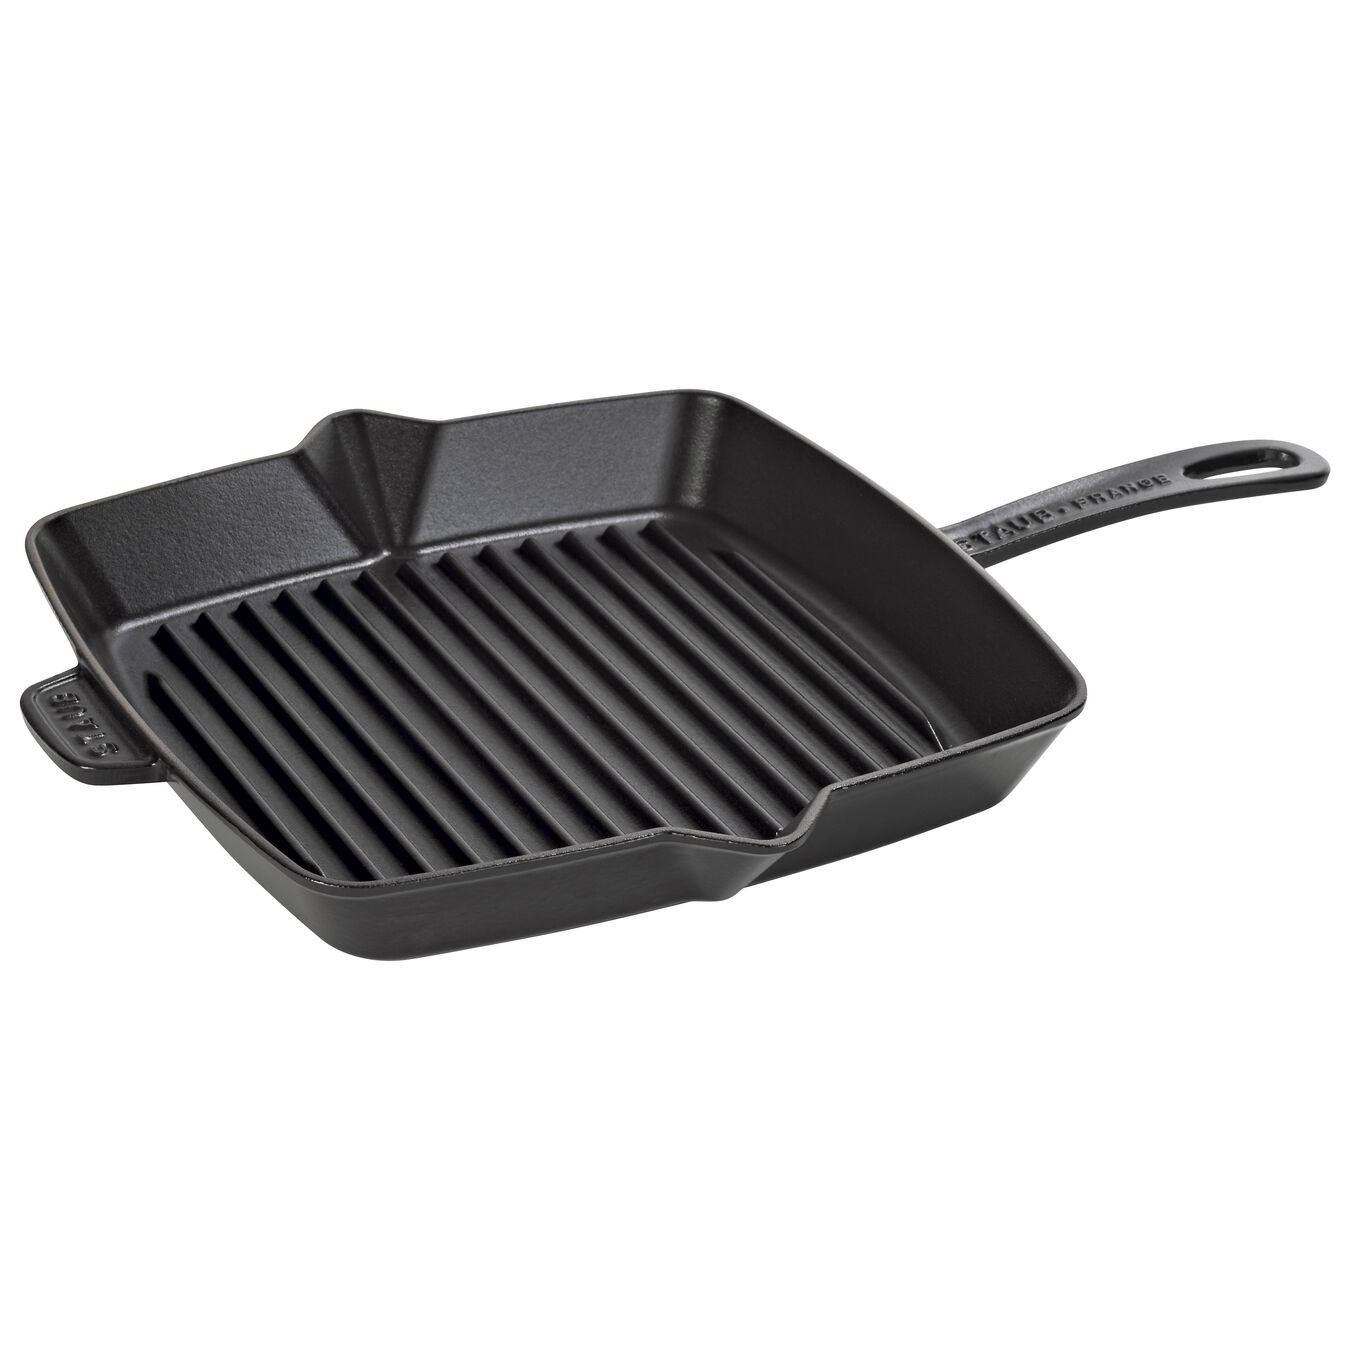 30 cm cast iron square American grill, black,,large 3